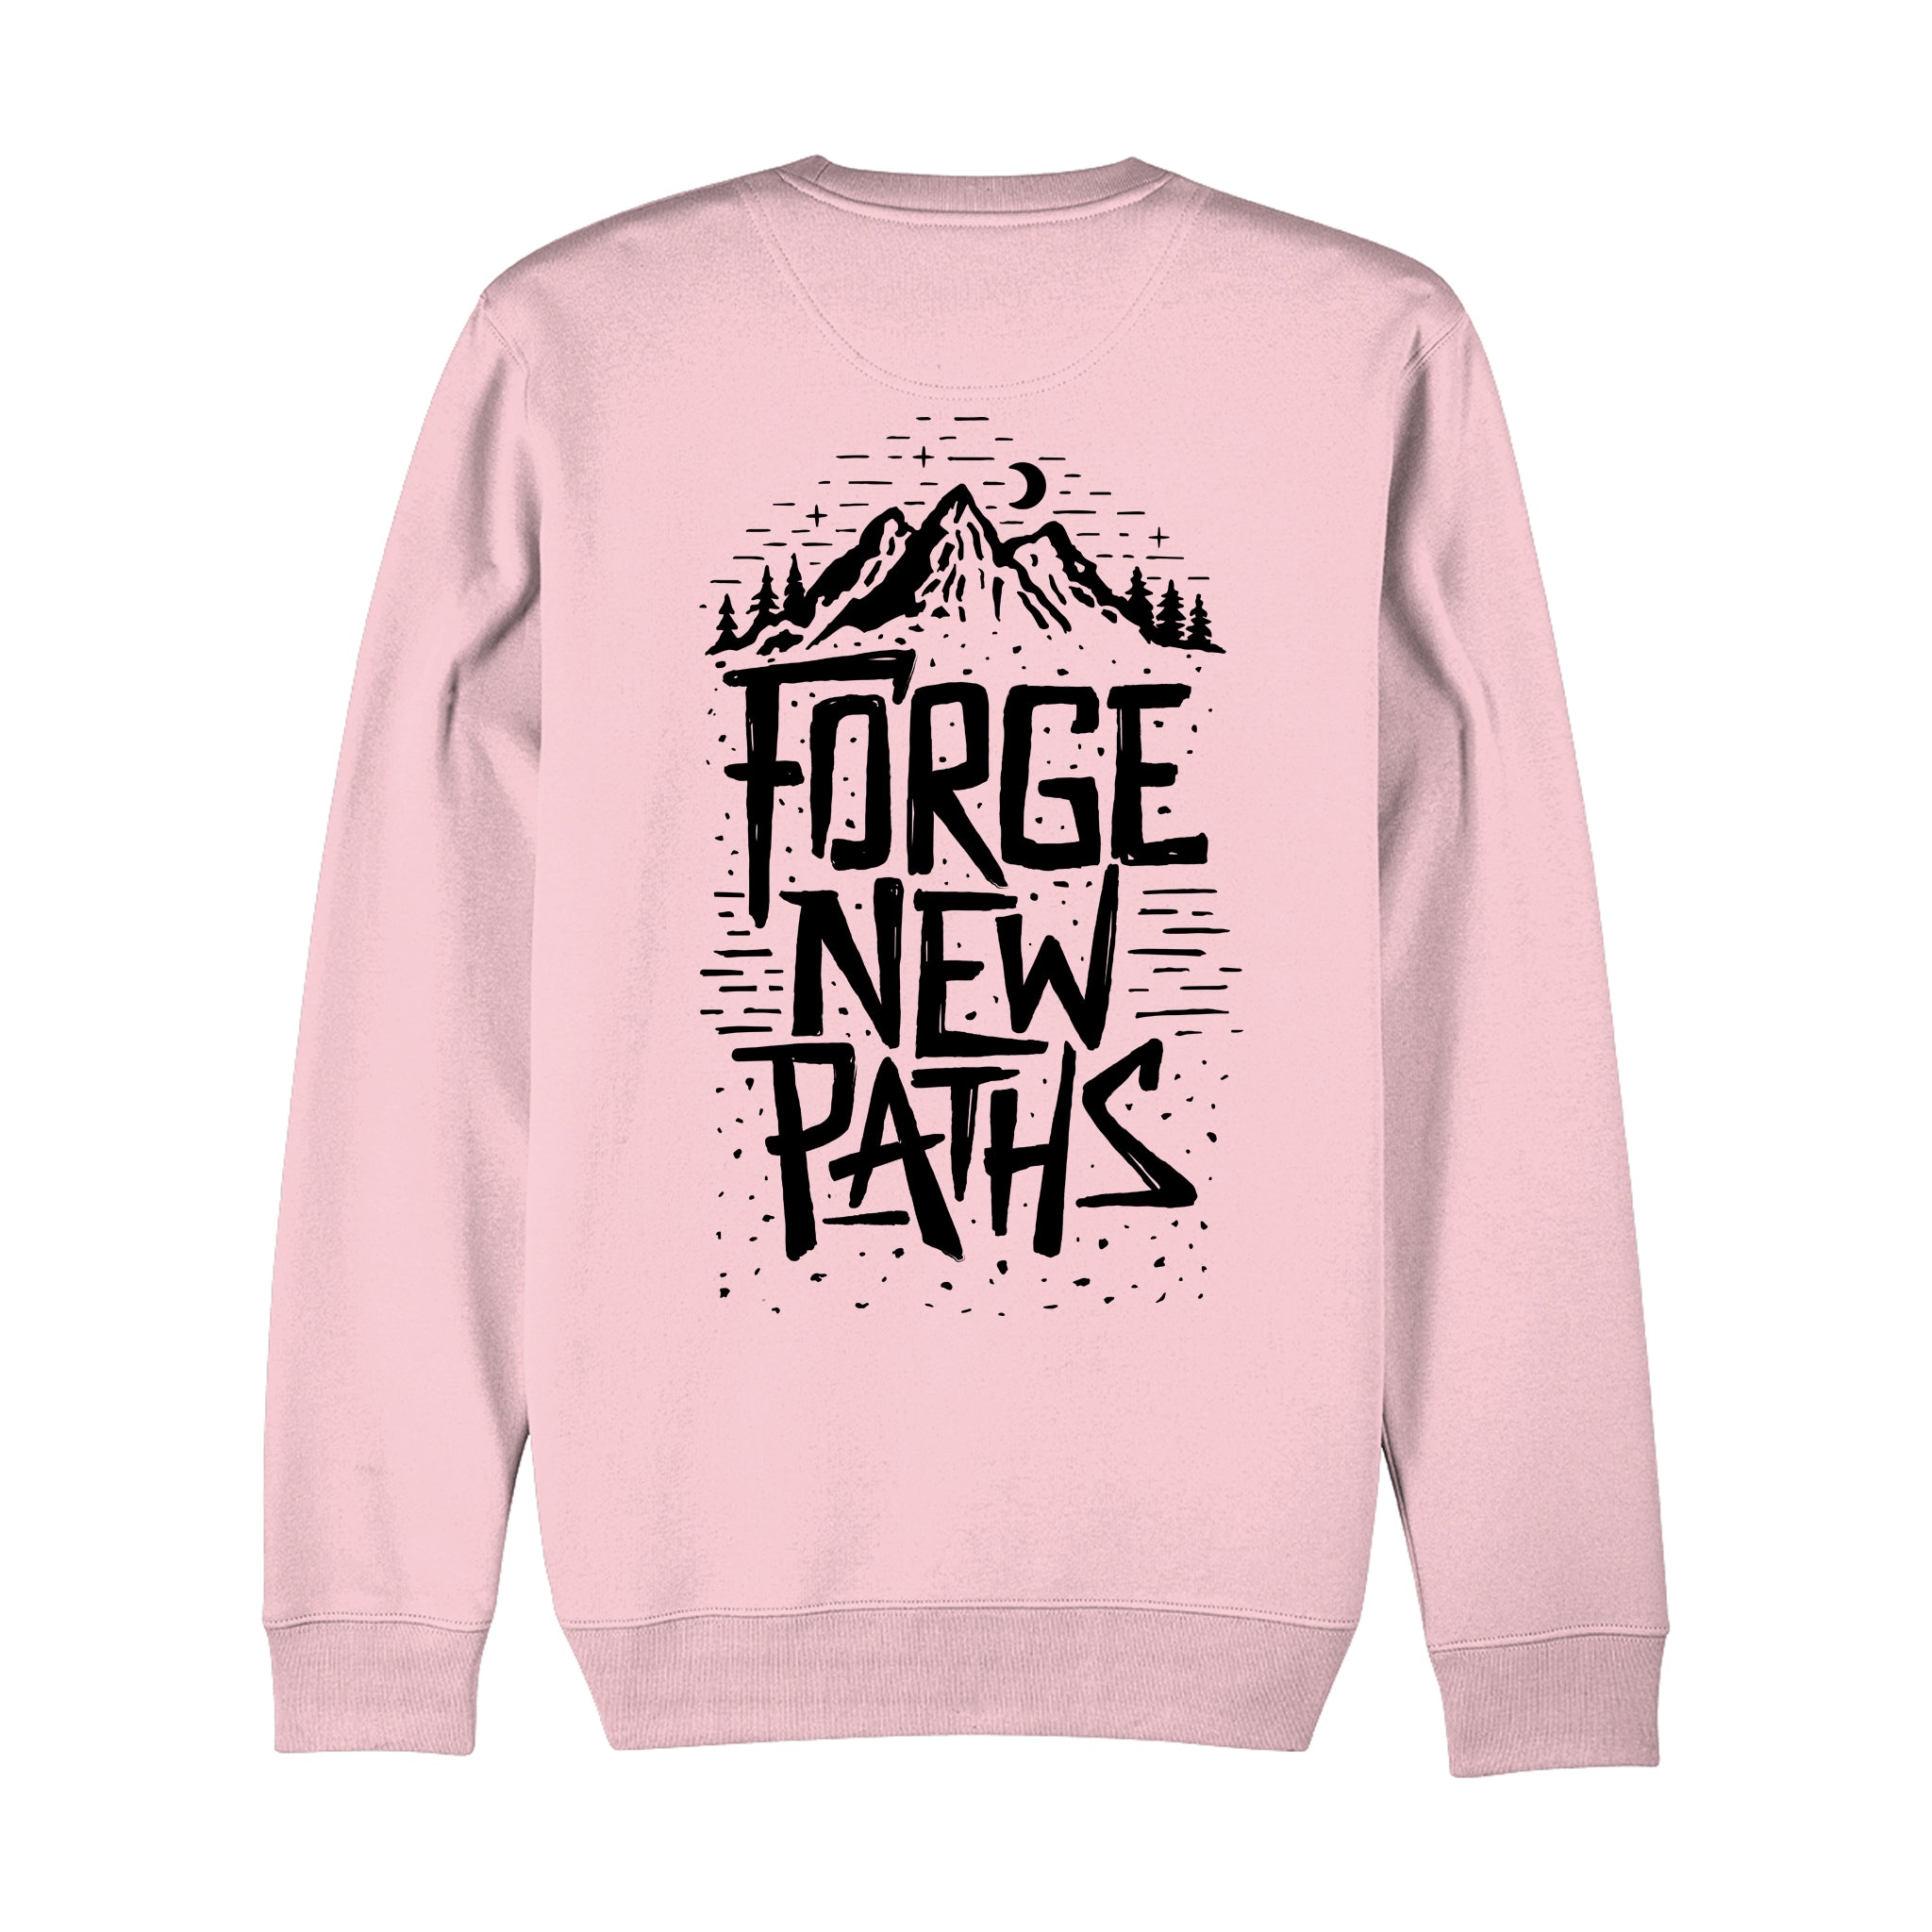 'Forge New Paths' Women's Sweatshirt